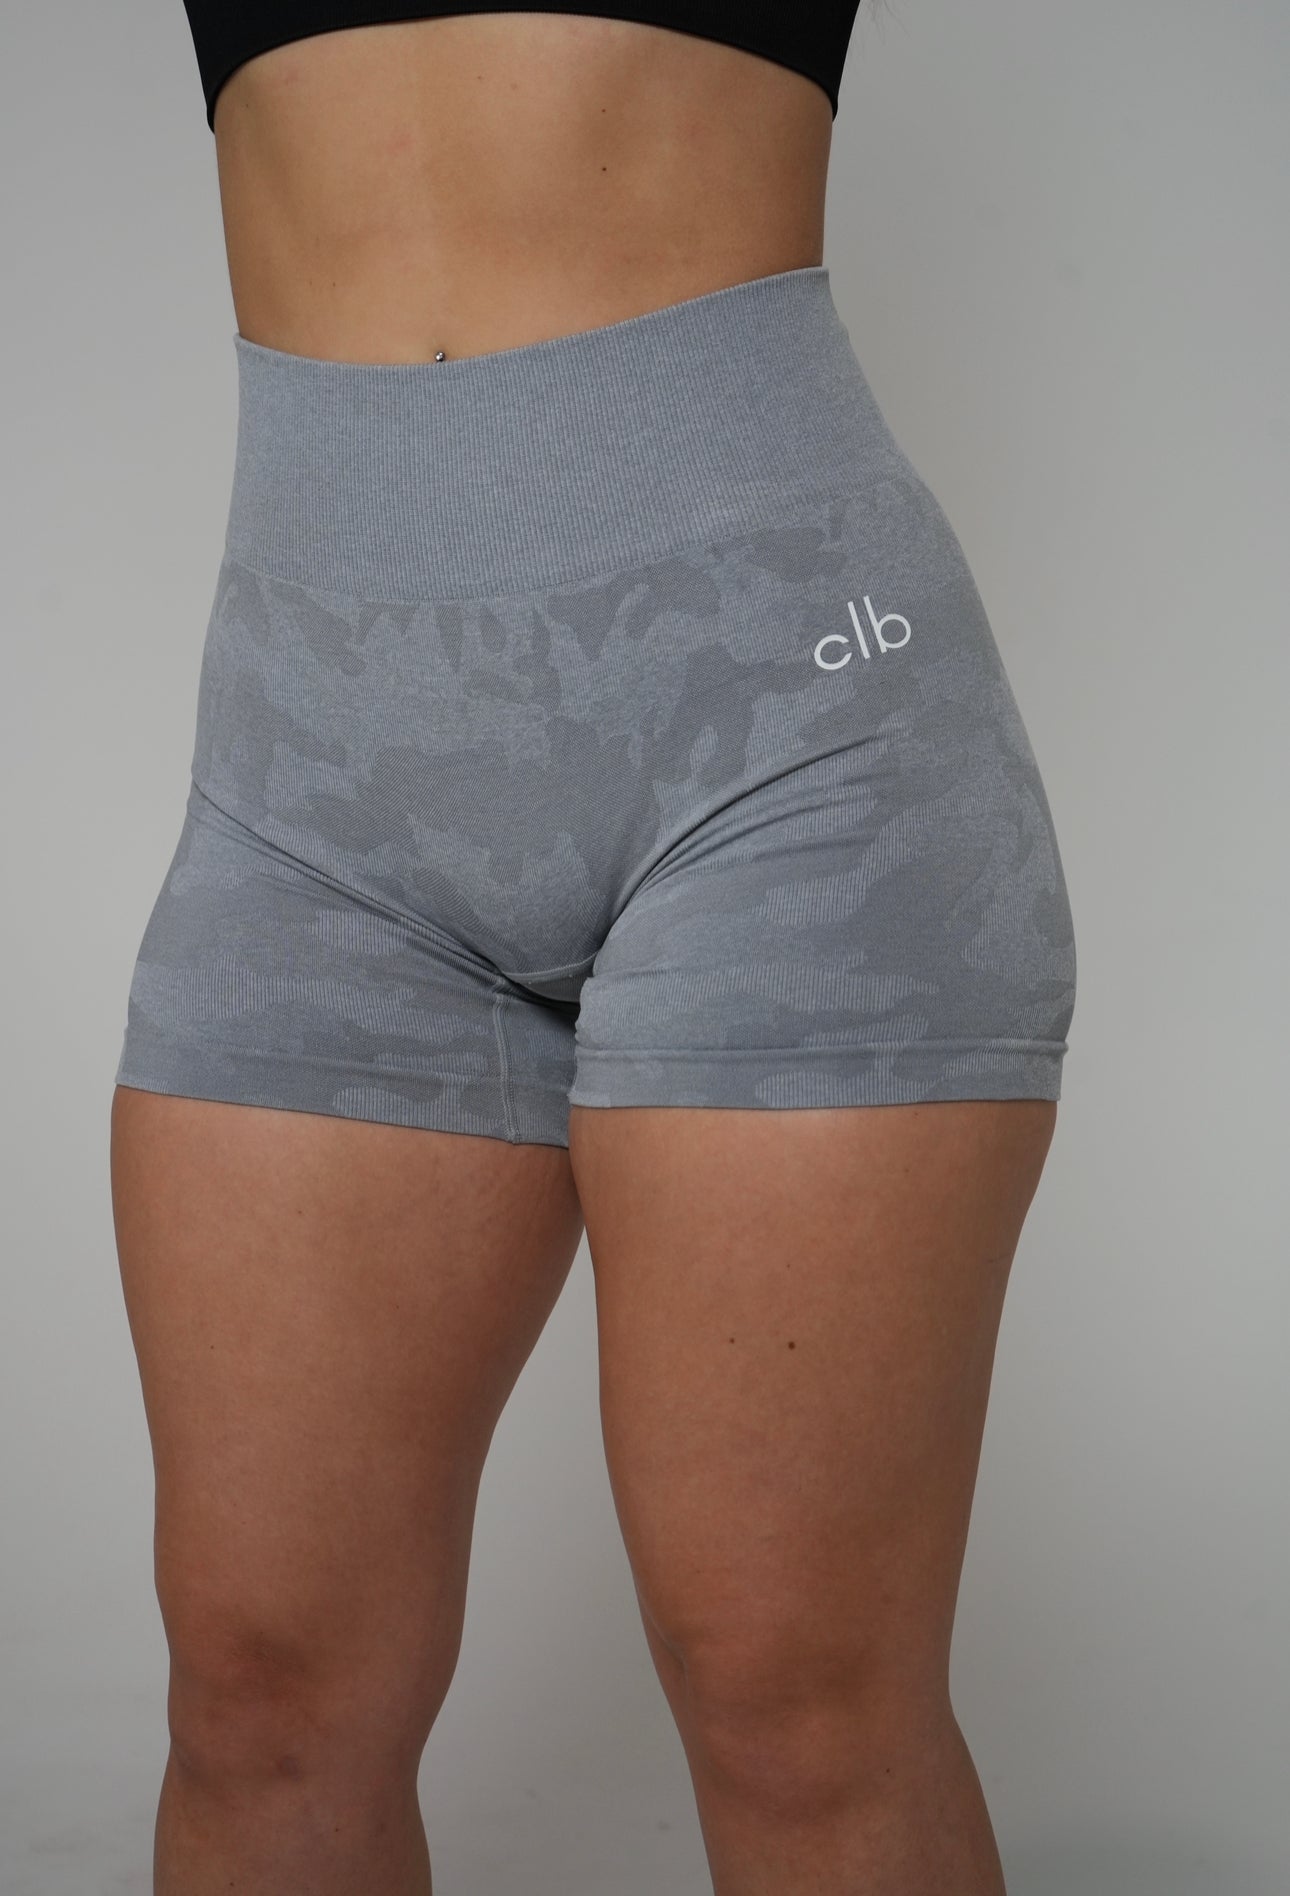 CLB Grey Camo Shorts